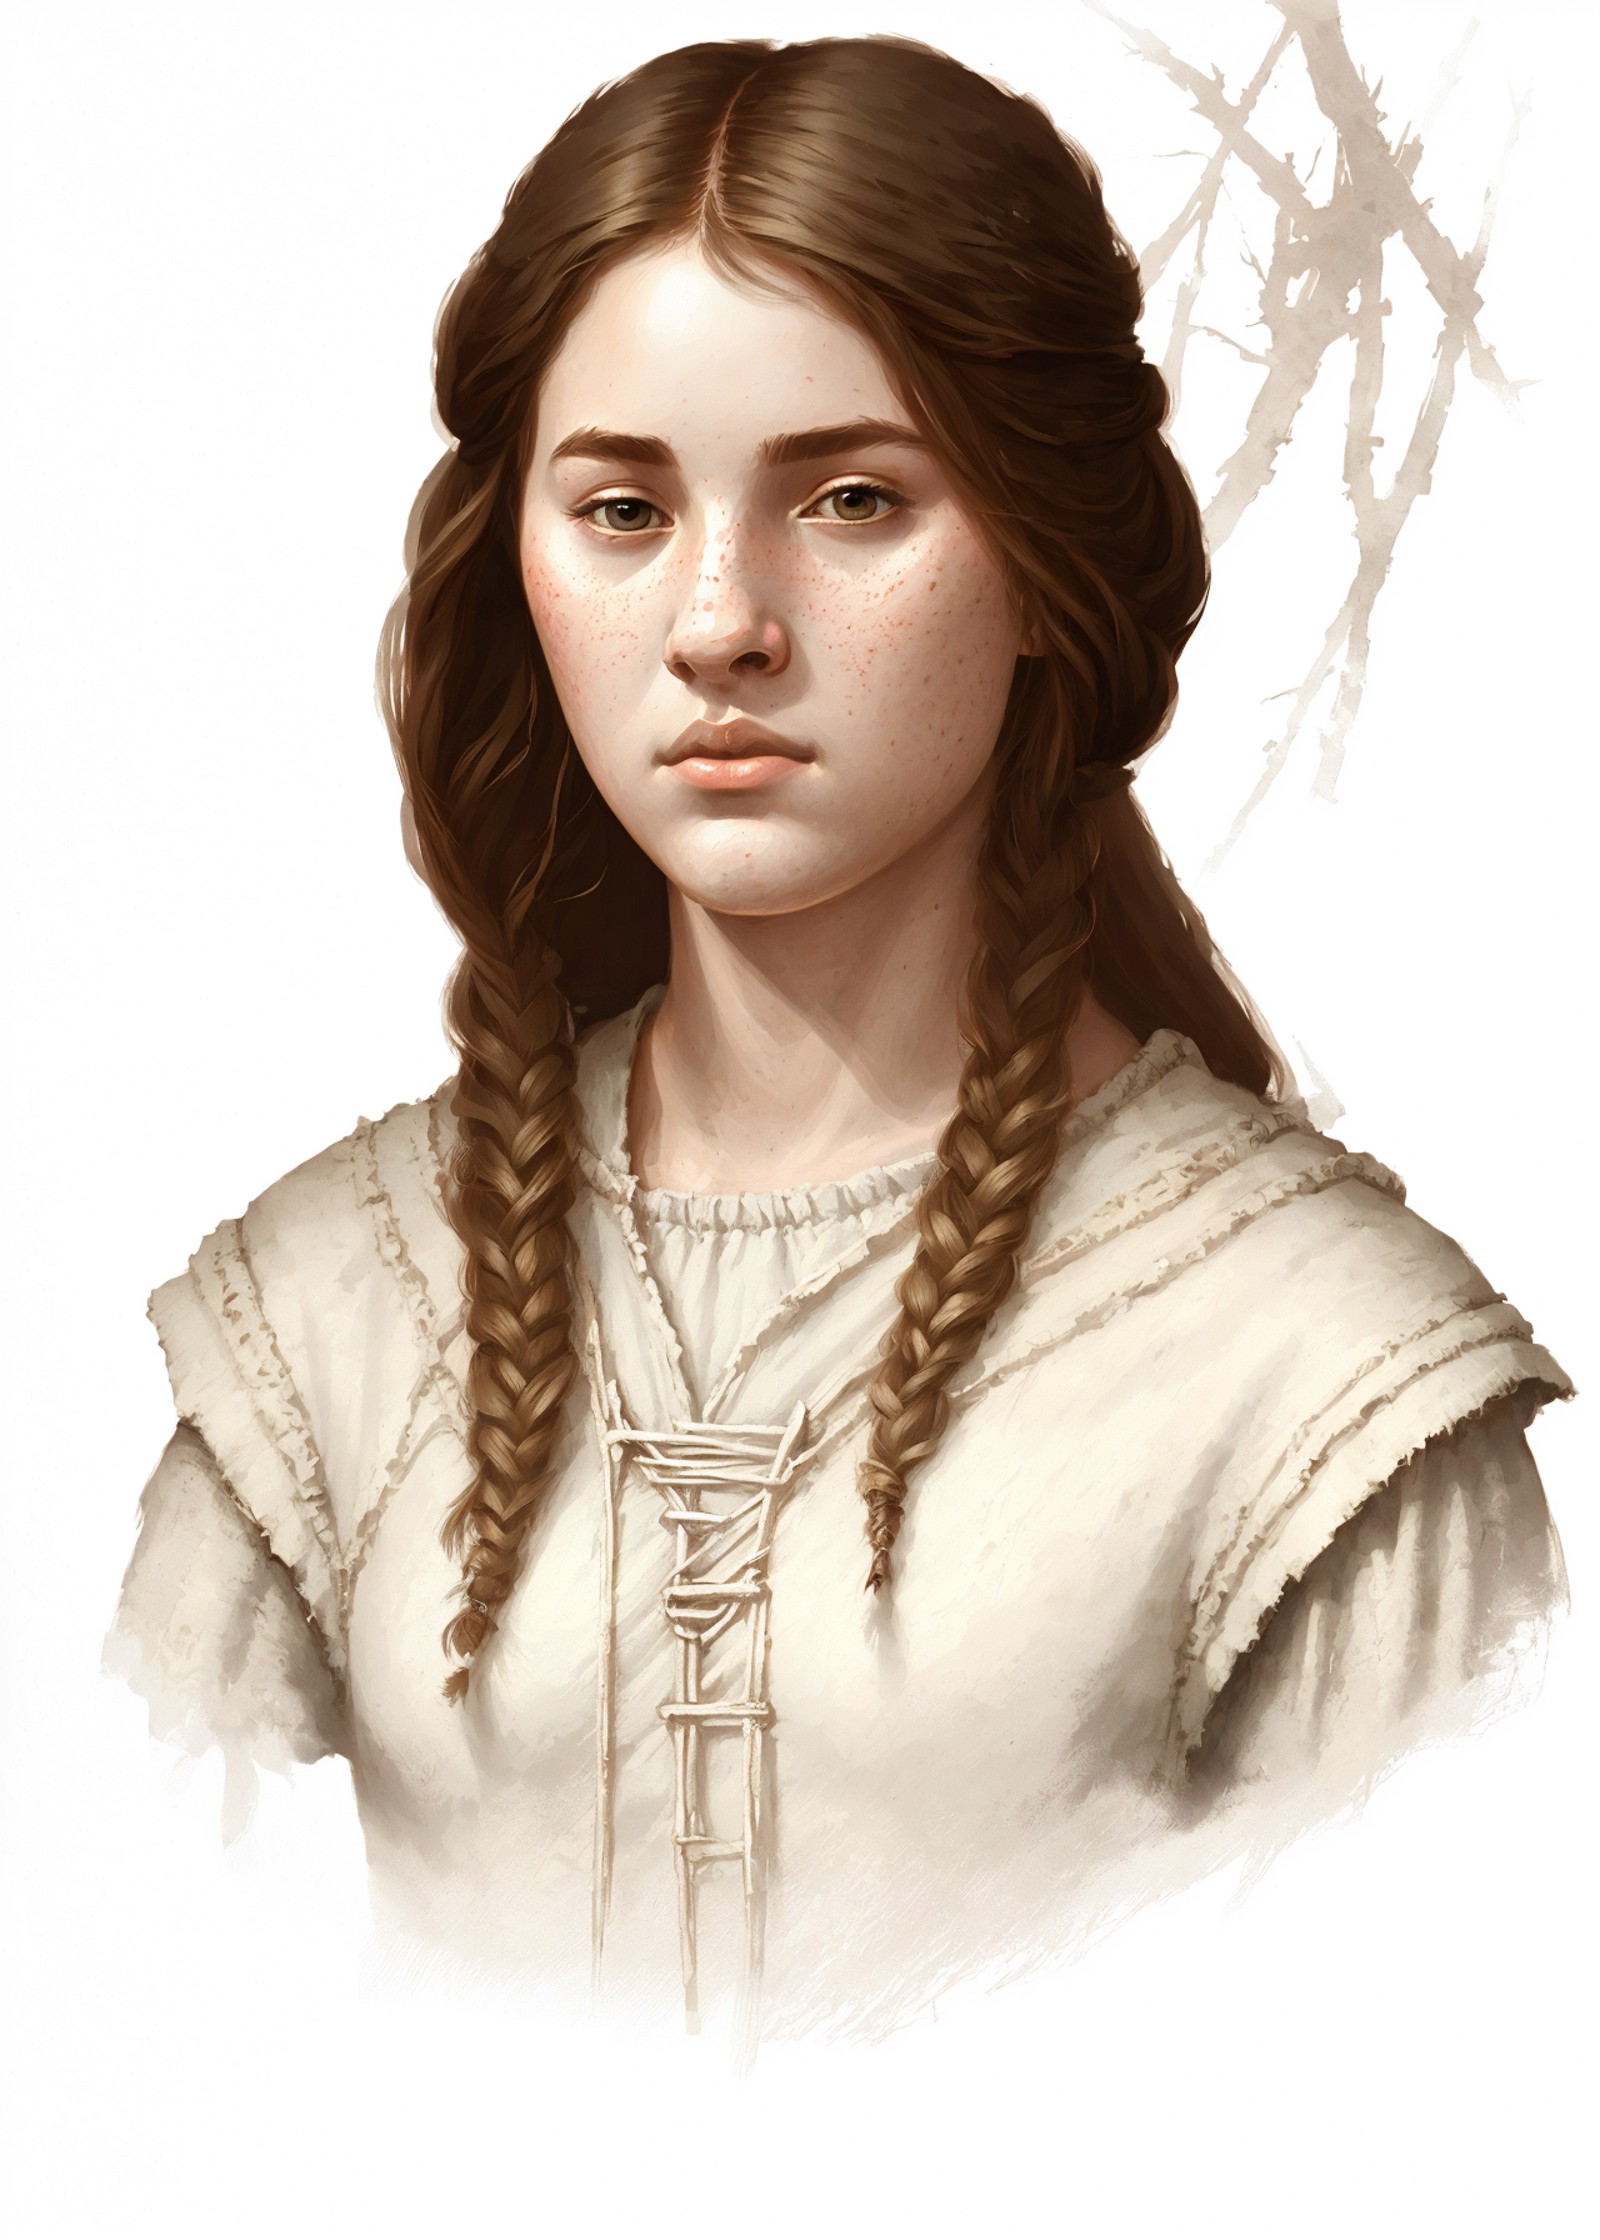 rpp, portrait of a medieval teen girl, illustration, concept art, in the style of greg rutkowski <lora:dnd_portrait:0.7>